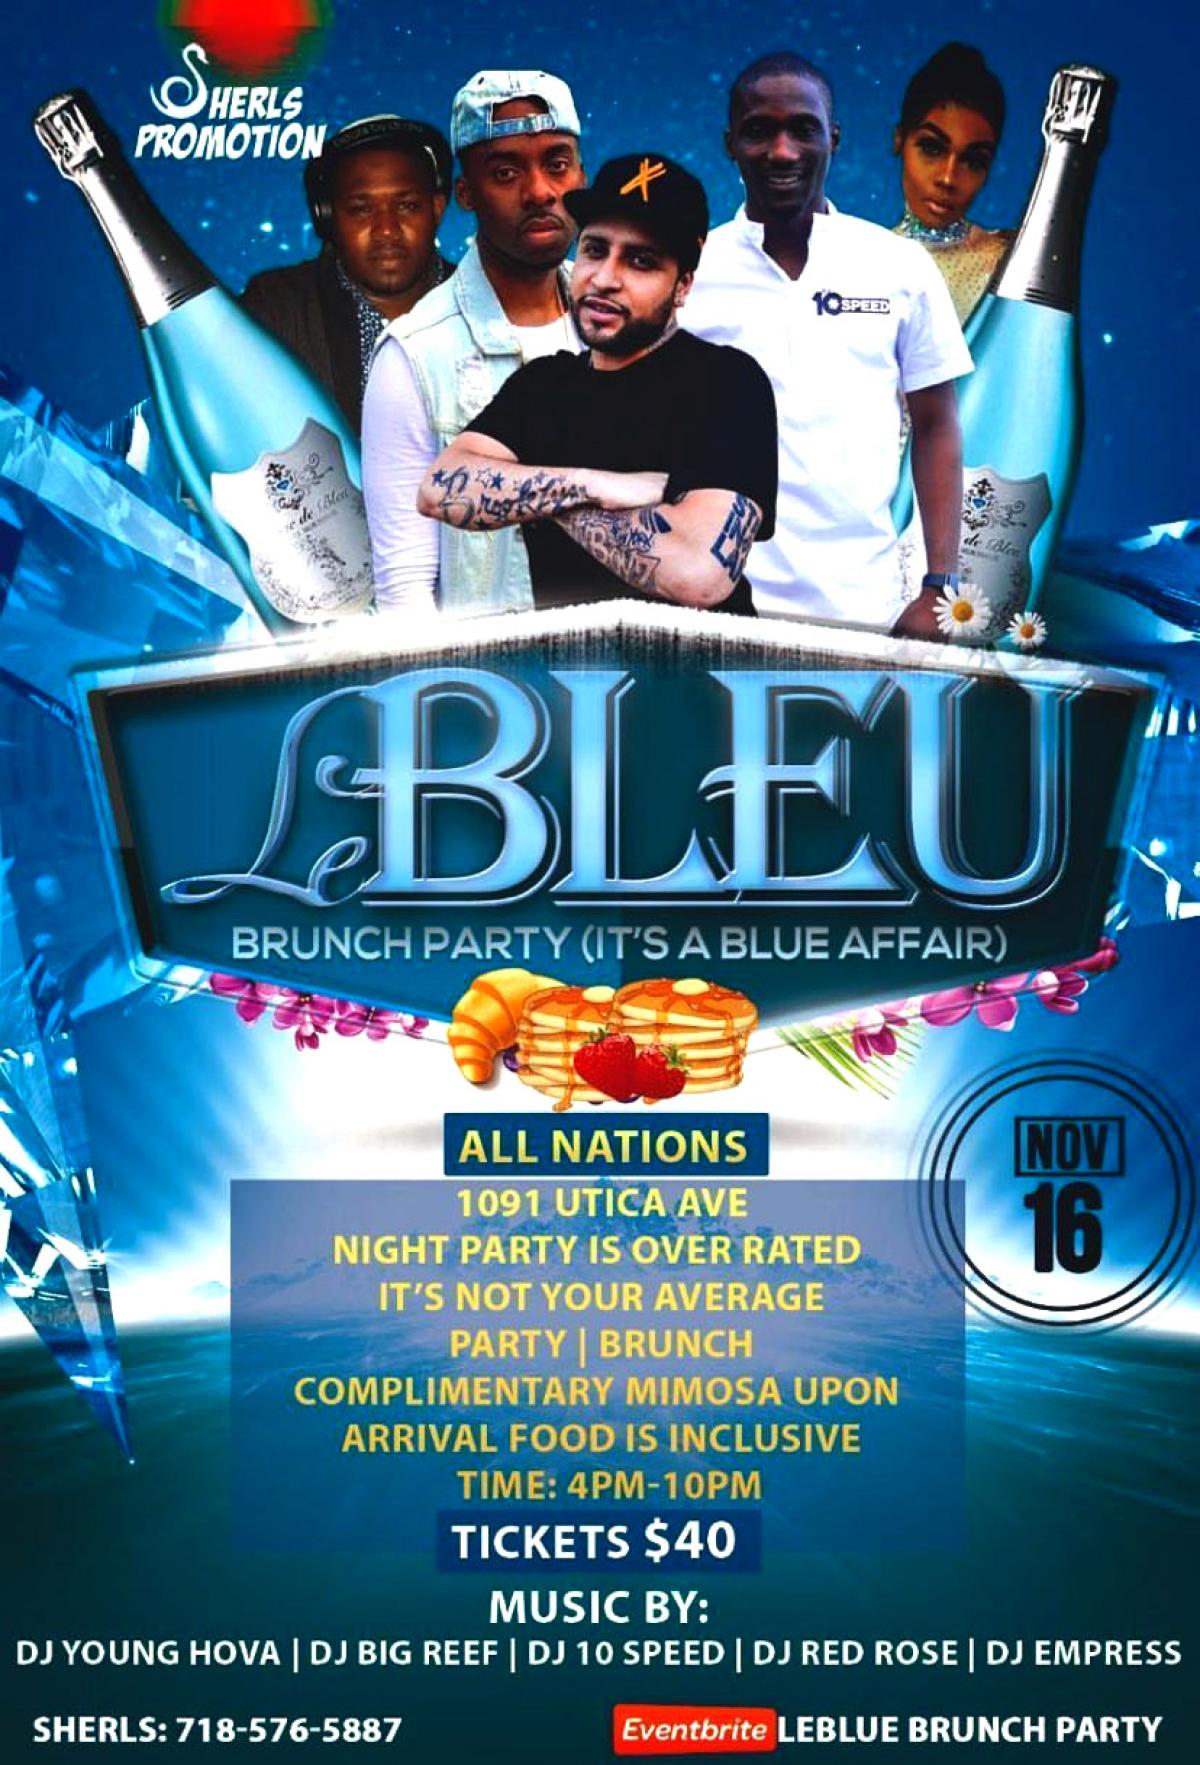 Le Blue Brunch Party flyer or graphic.